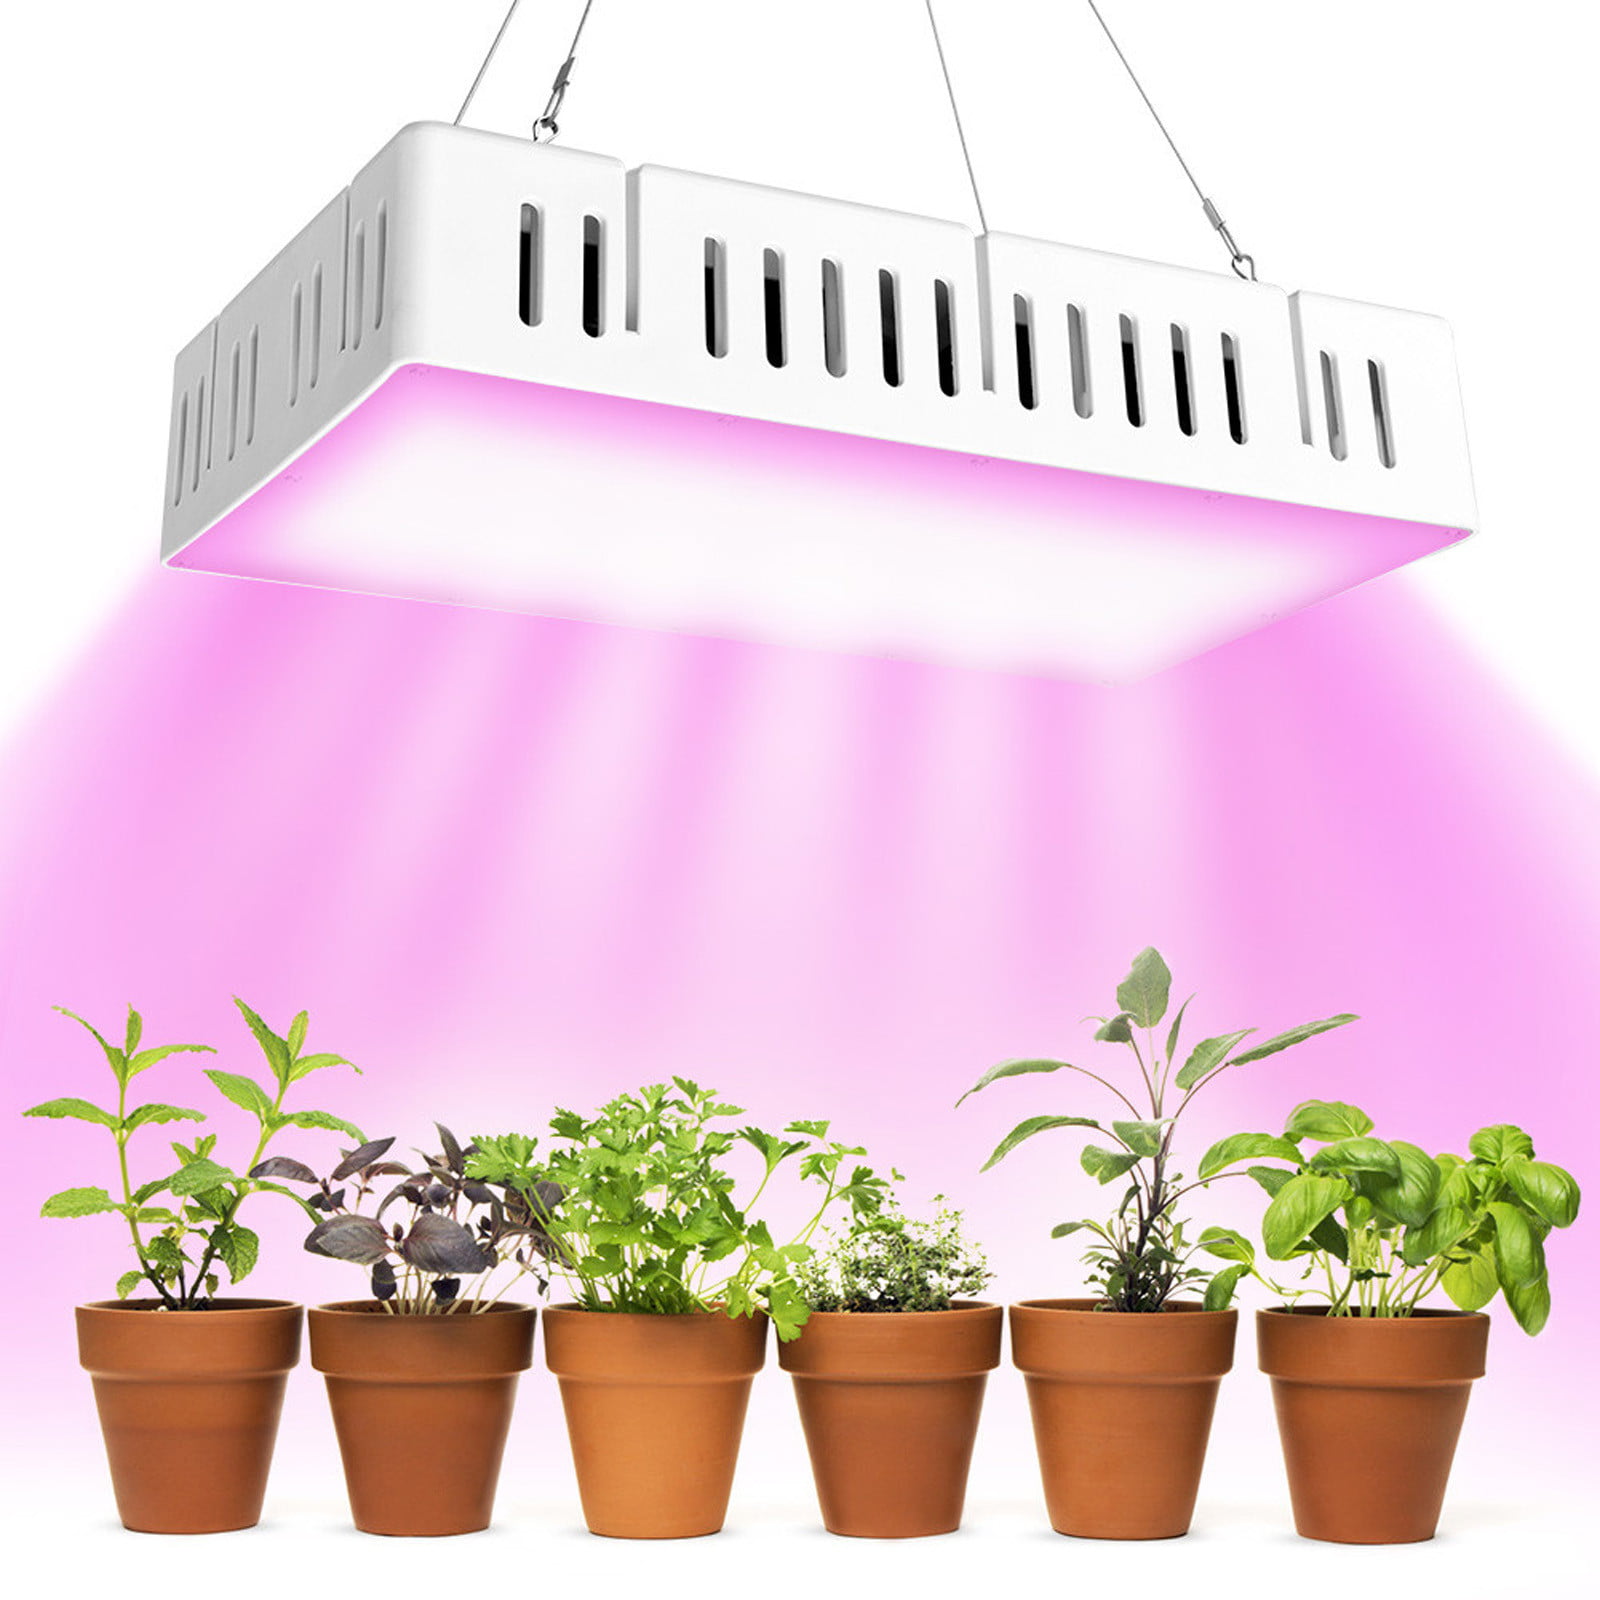 Details about   US 1000W LED Grow Light Full Spectrum UV IR For Indoor Flower Veg Plants Growing 